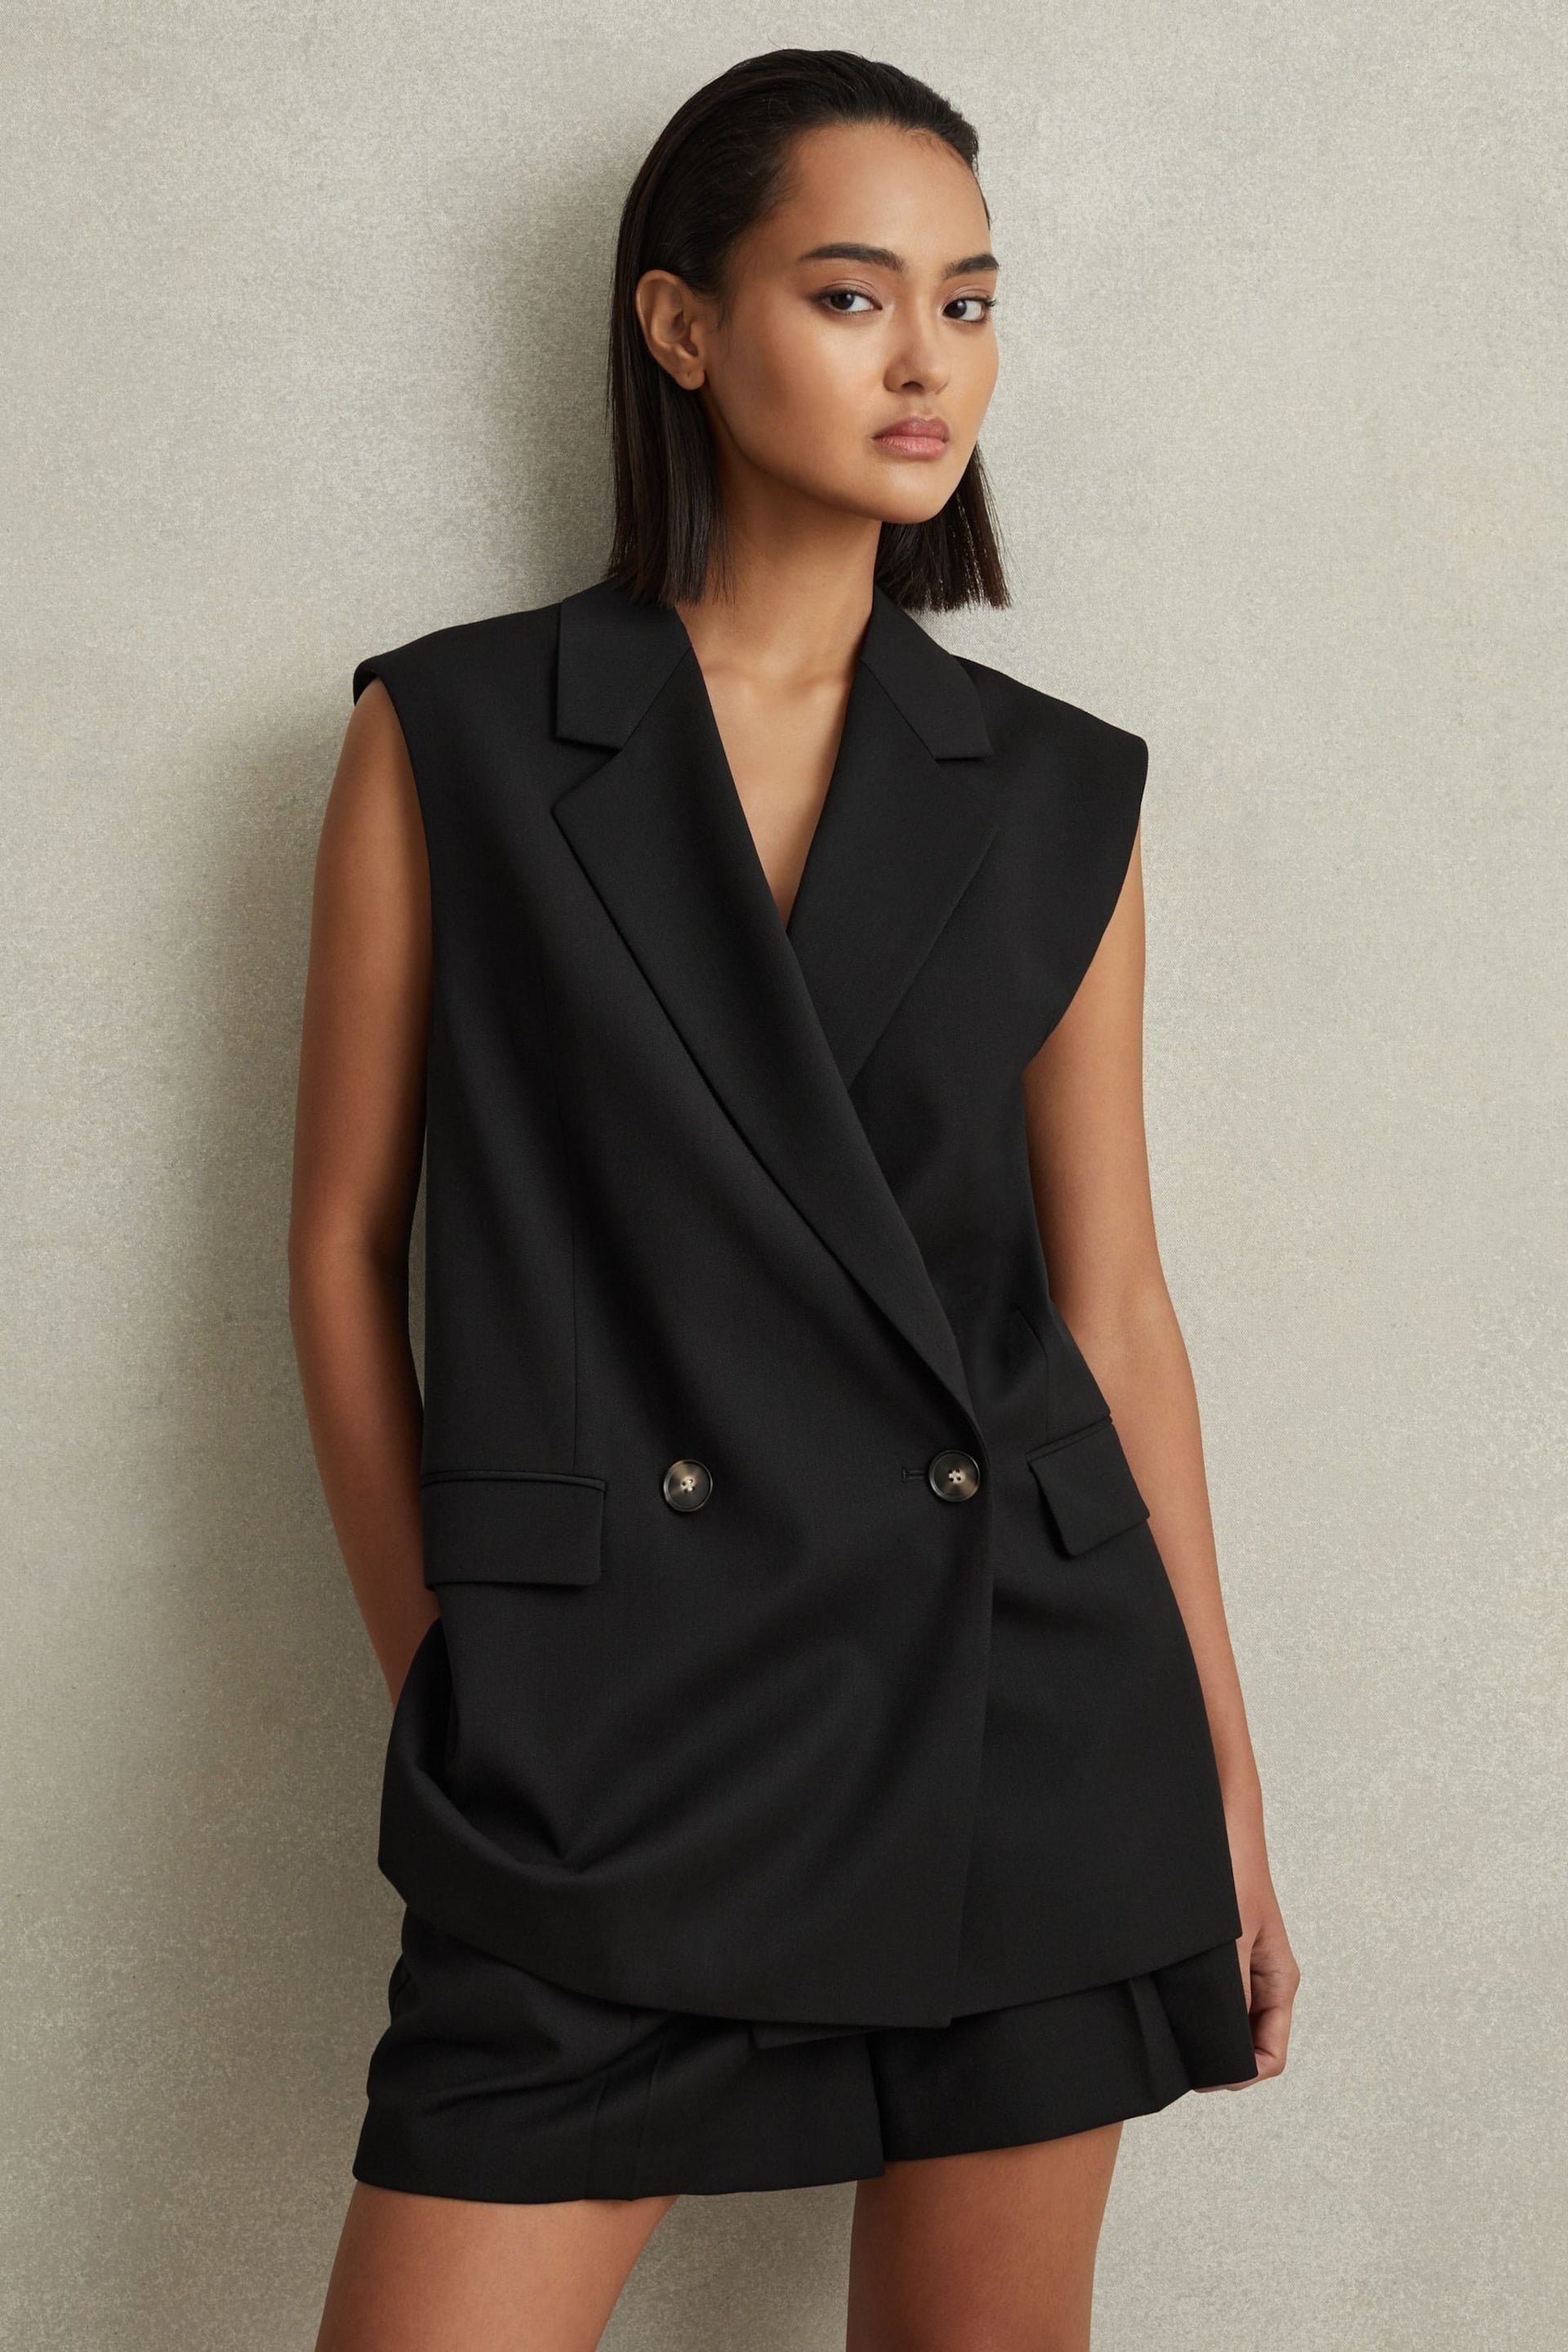 Reiss Black Karyn Wool Blend Double Breasted Waistcoat - Image 1 of 6